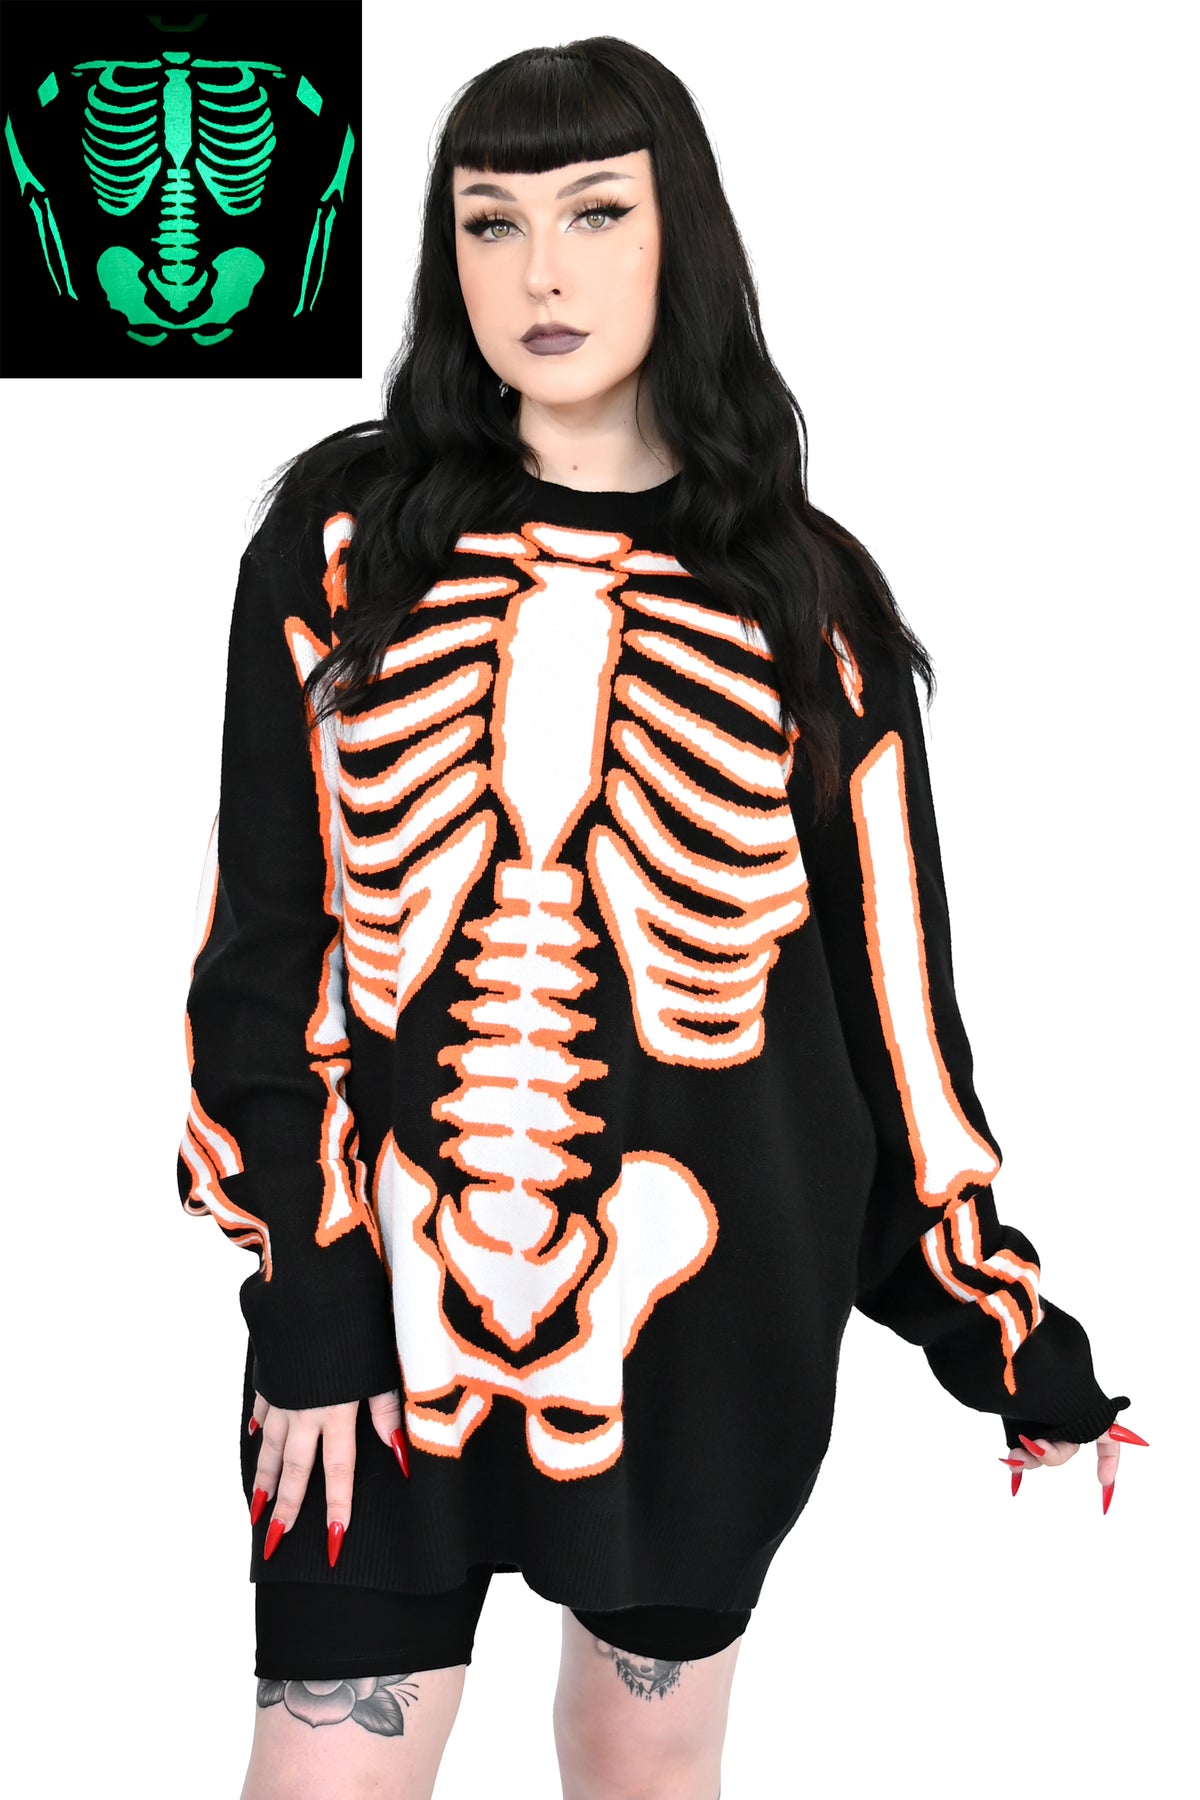 All Bones Skeleton Sweater - Glow in the Dark! No Restock!